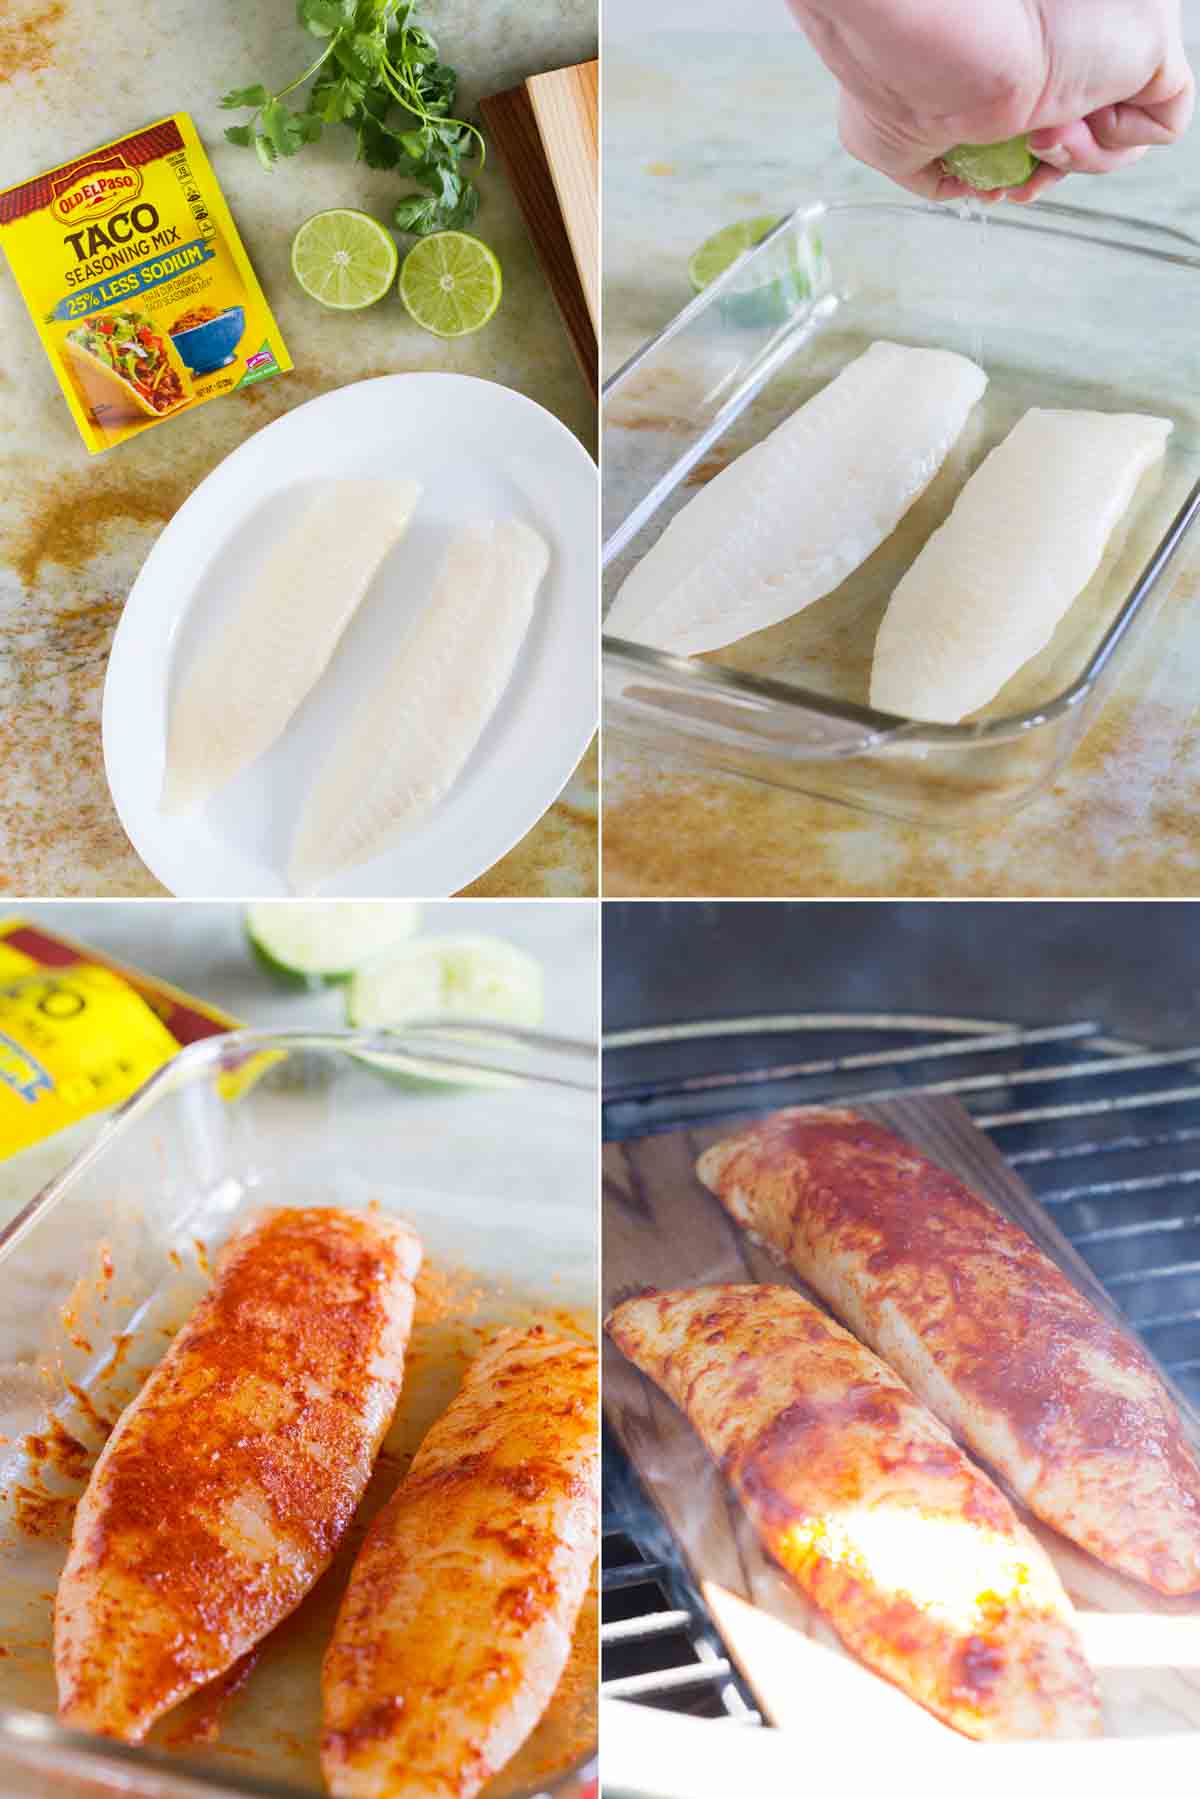 process to make taco seasoned grilled fish